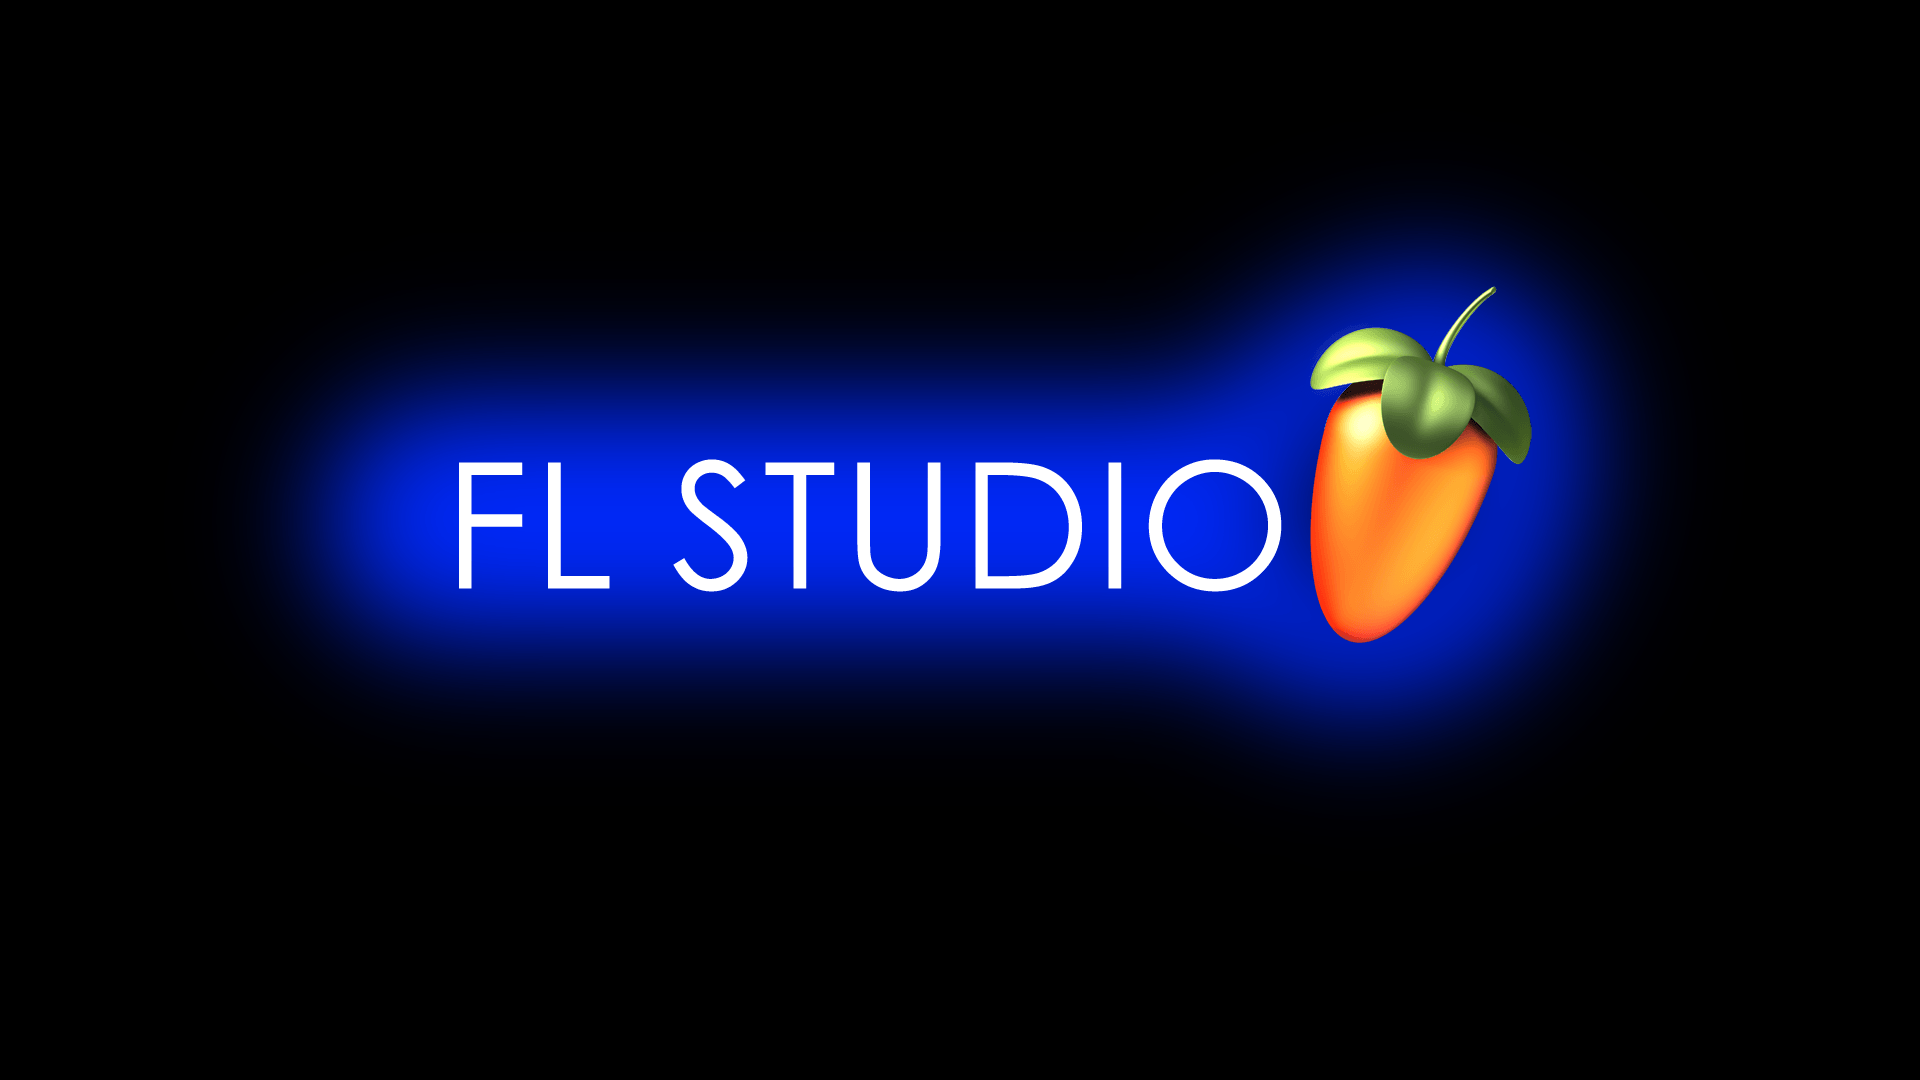 48+] FL Studio Wallpapers and Backgrounds - WallpaperSafari